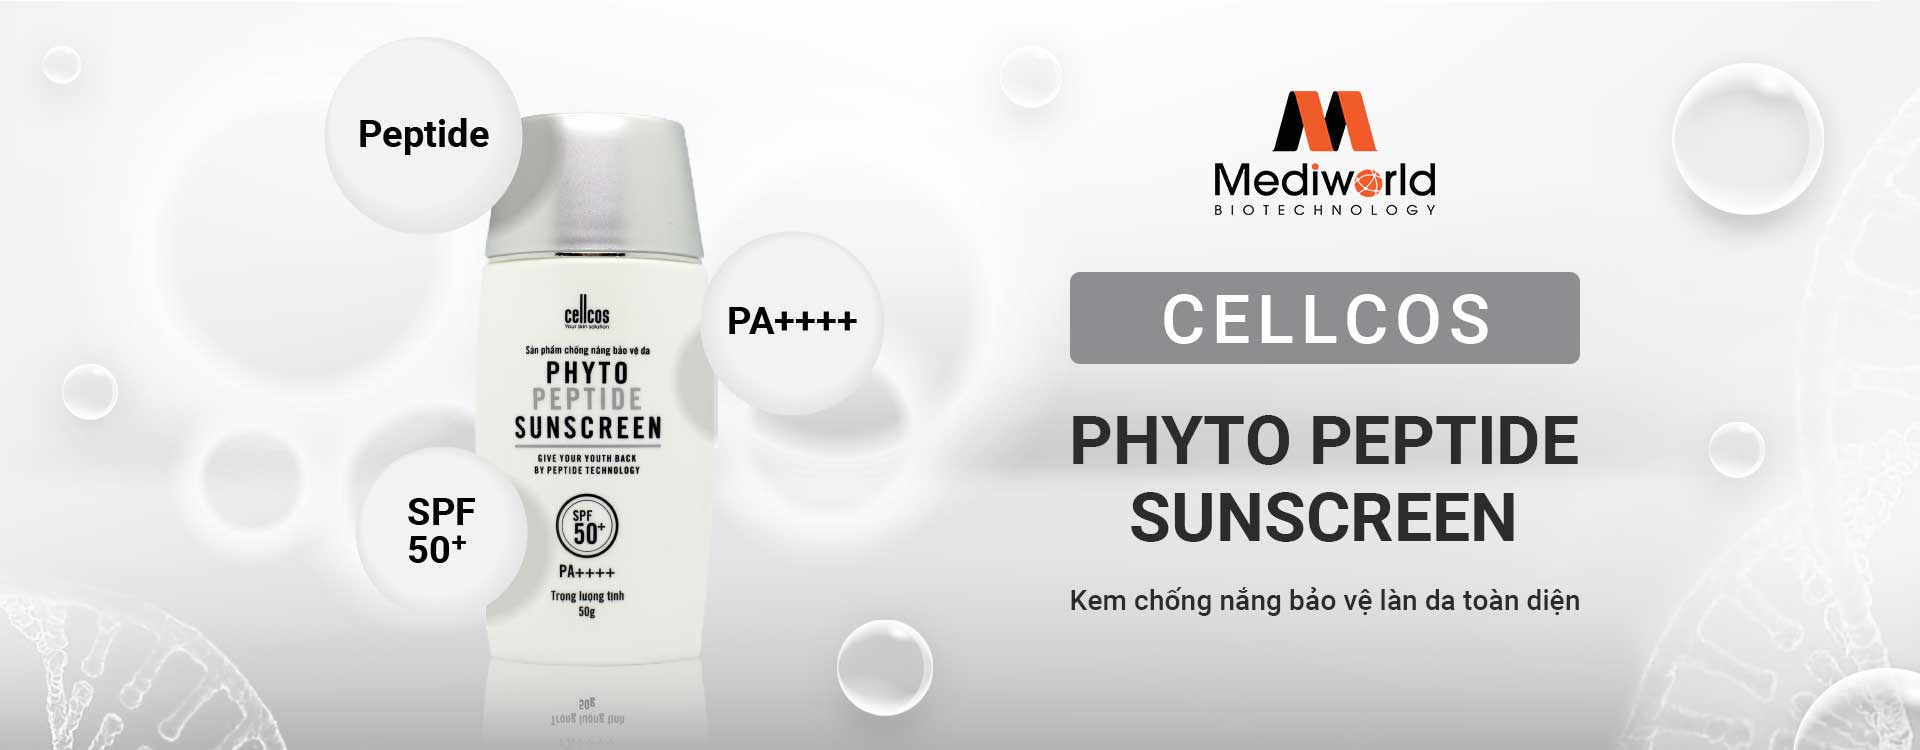 HomeSlide - Cellcos Phyto Peptide Sunscreen